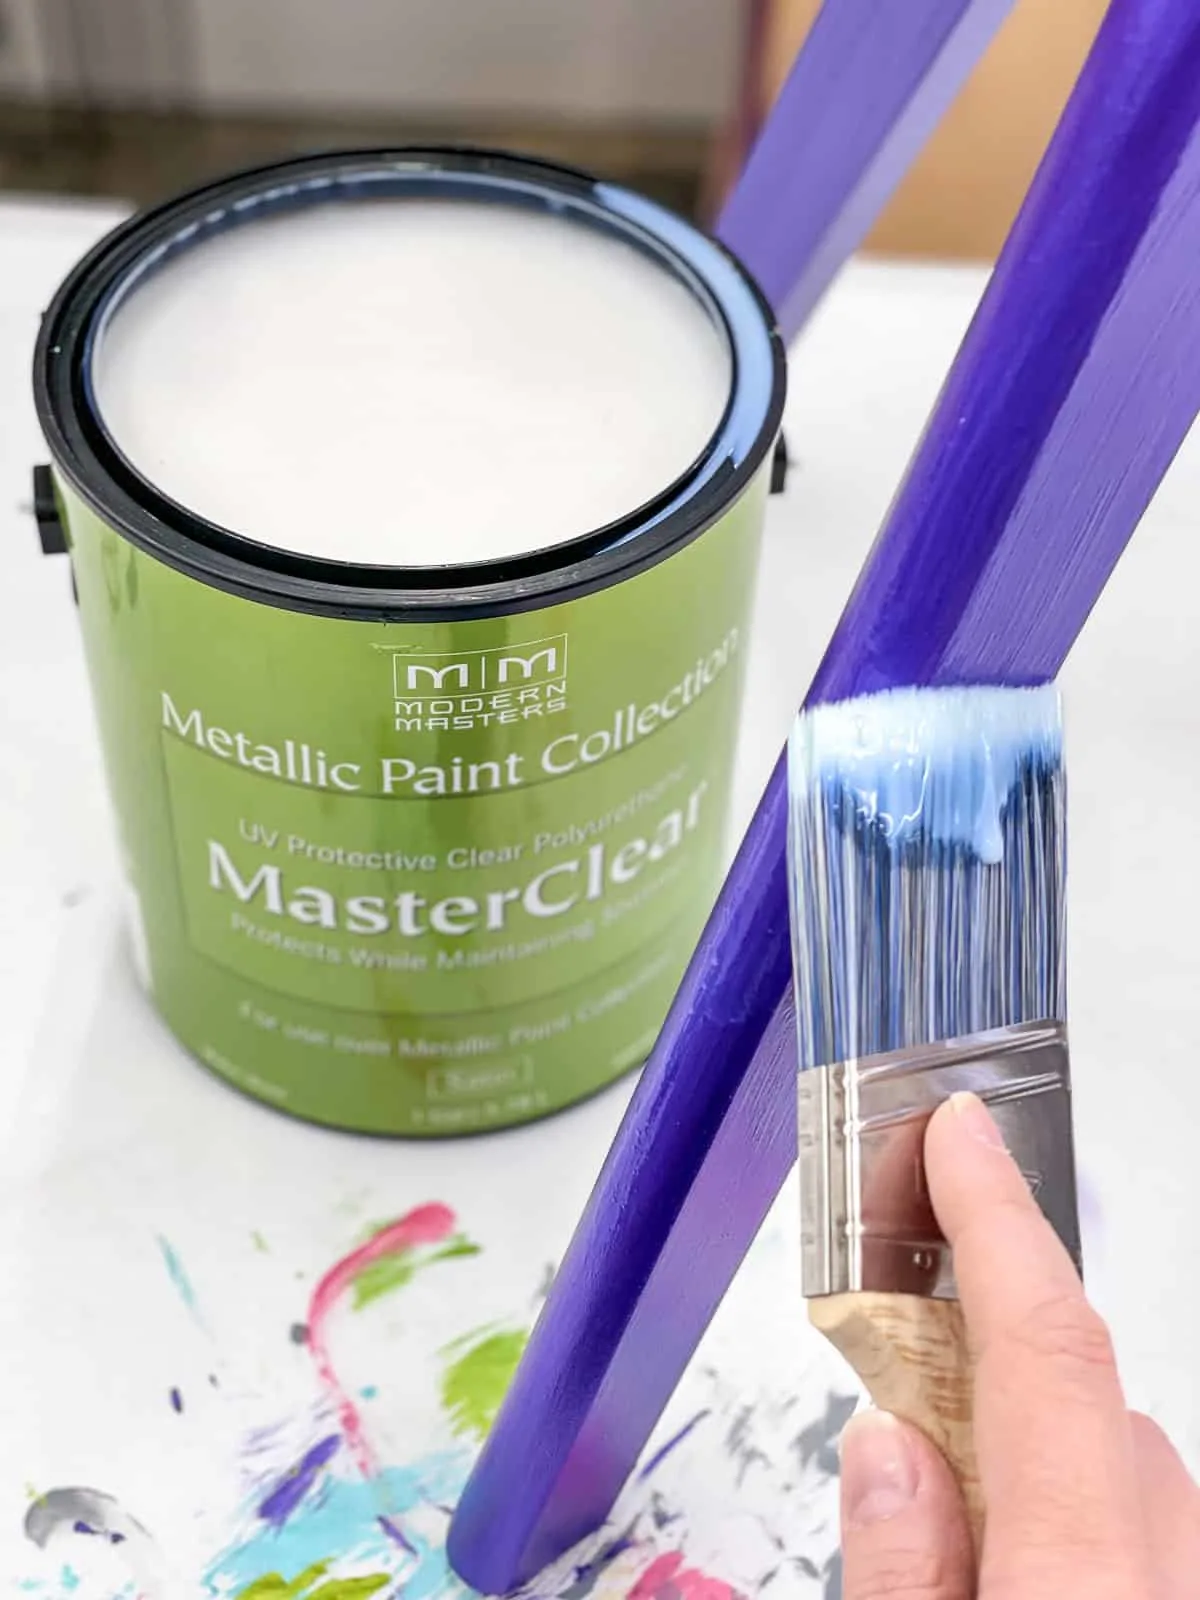 applying Modern Masters MasterClear top coat to purple metallic paint on chair leg